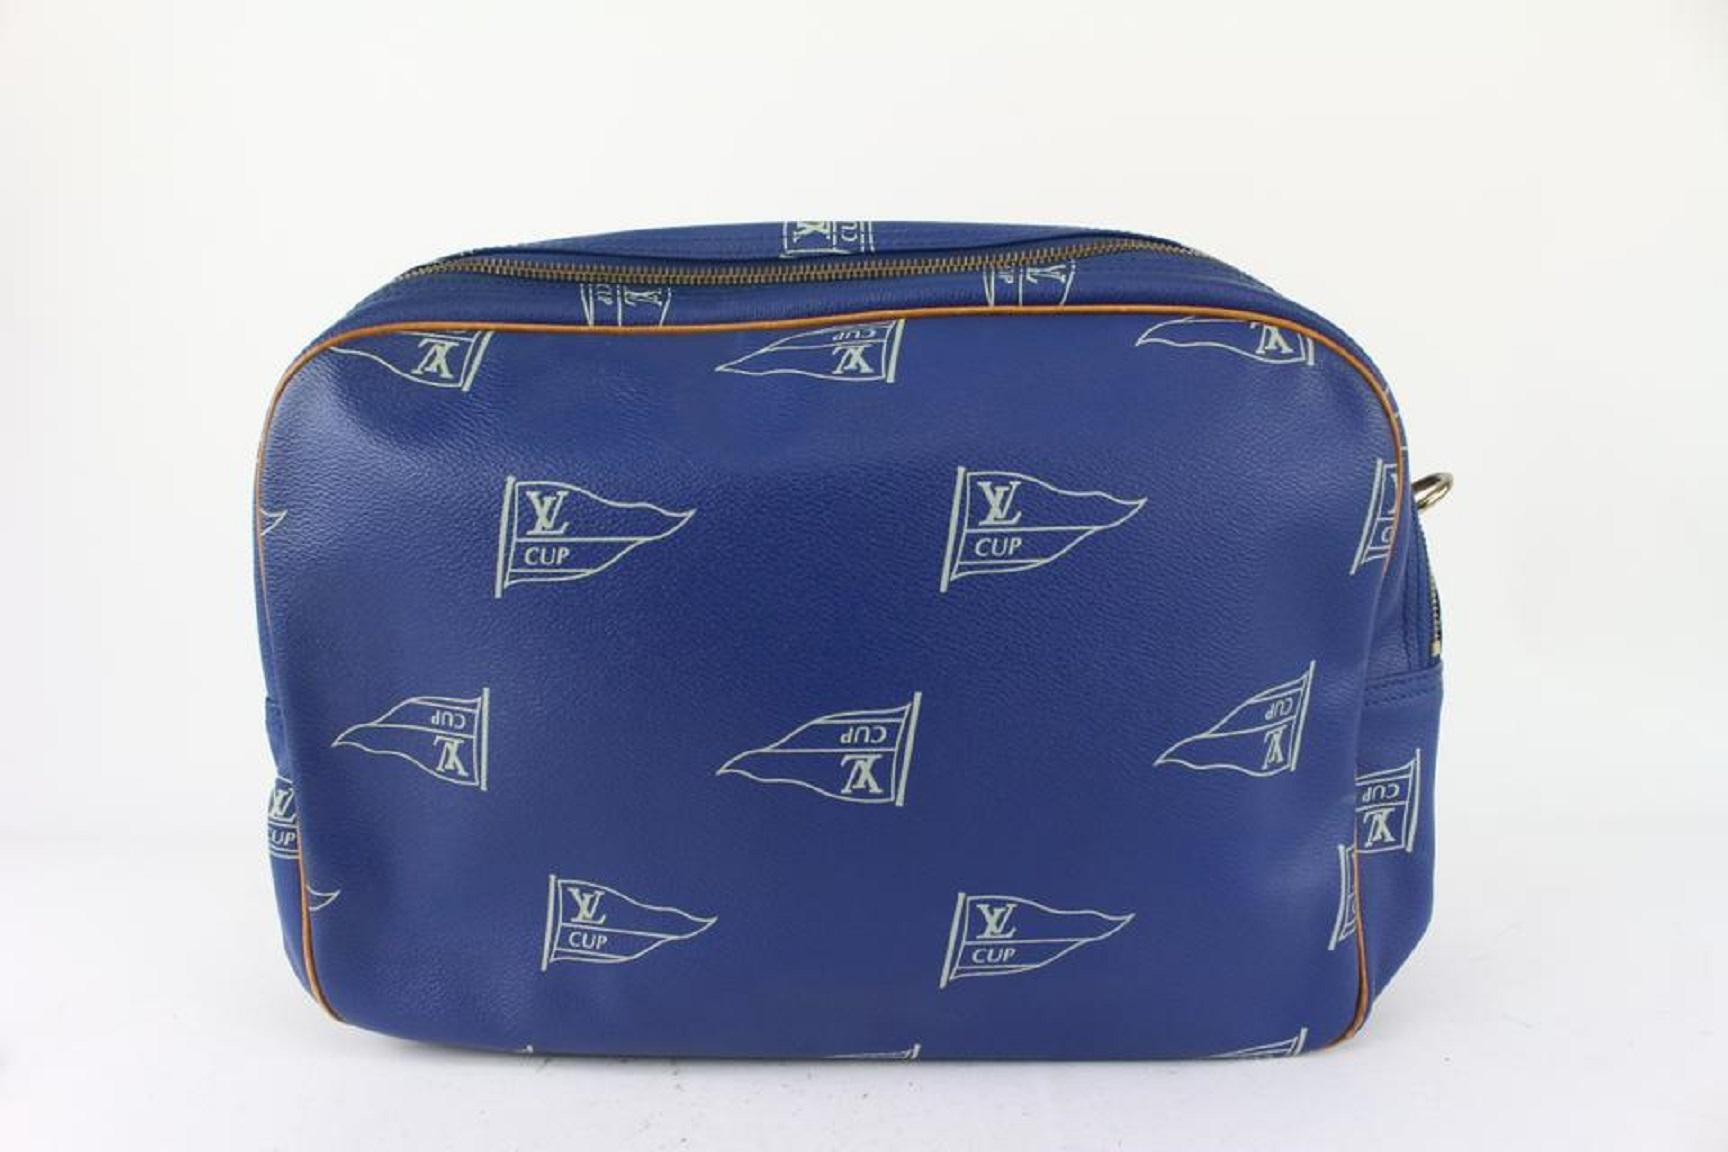 Sac à main Louis Vuitton 1991 LV Cup Bleu Monogramme Sail Sac Cowes Messenger Bag 826lv89   en vente 3